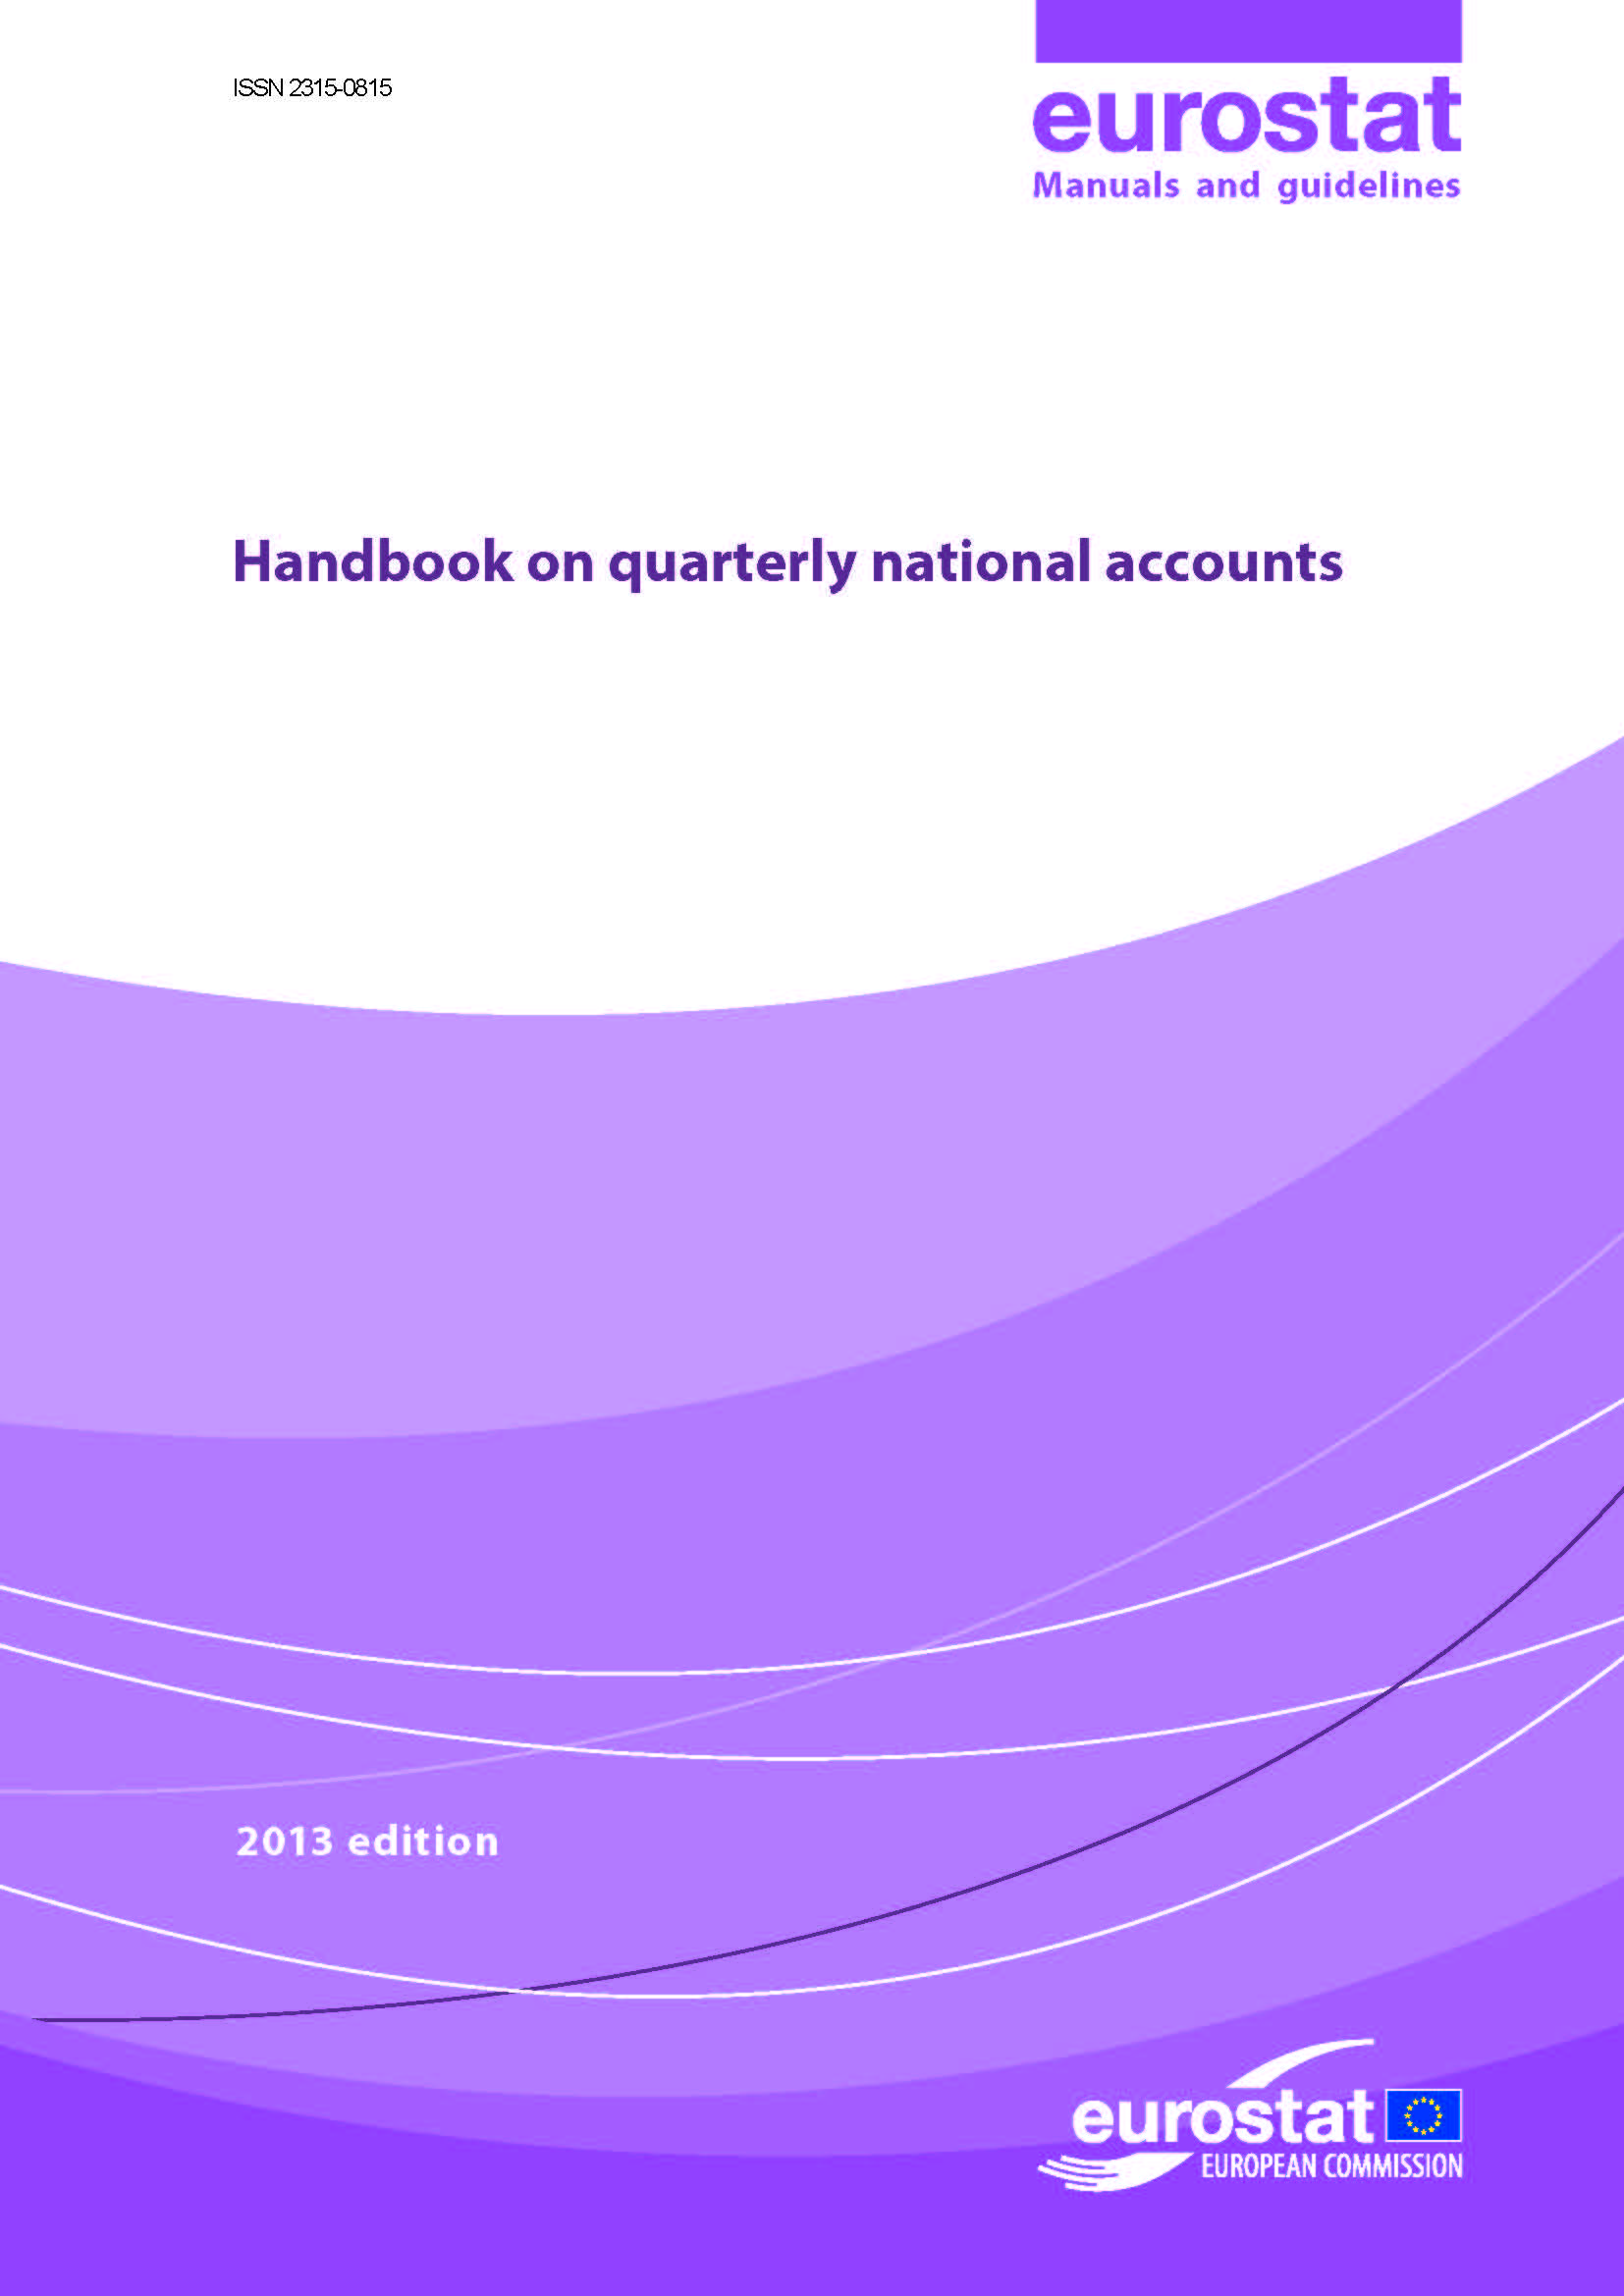 Handbook on quarterly national accounts - 2013 edition